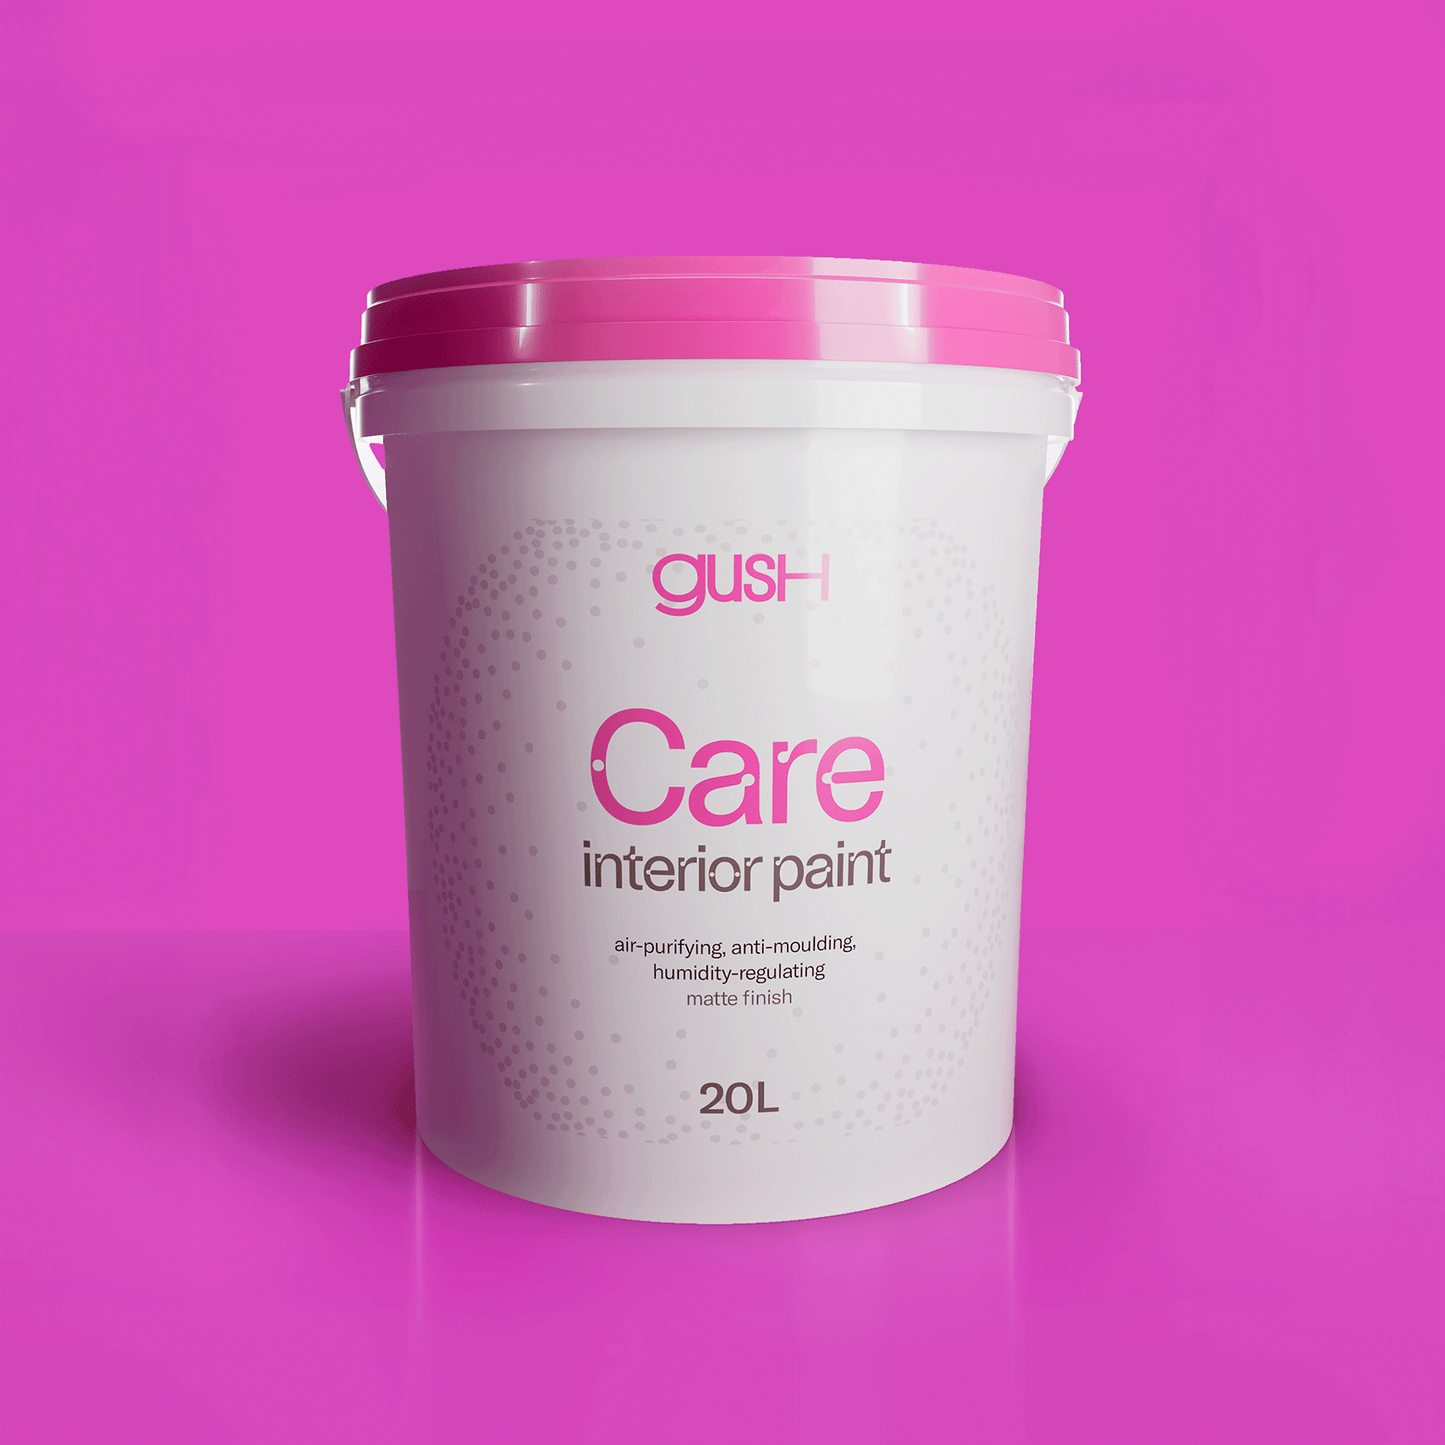 Gush Care Interior Paint - 20 Liter